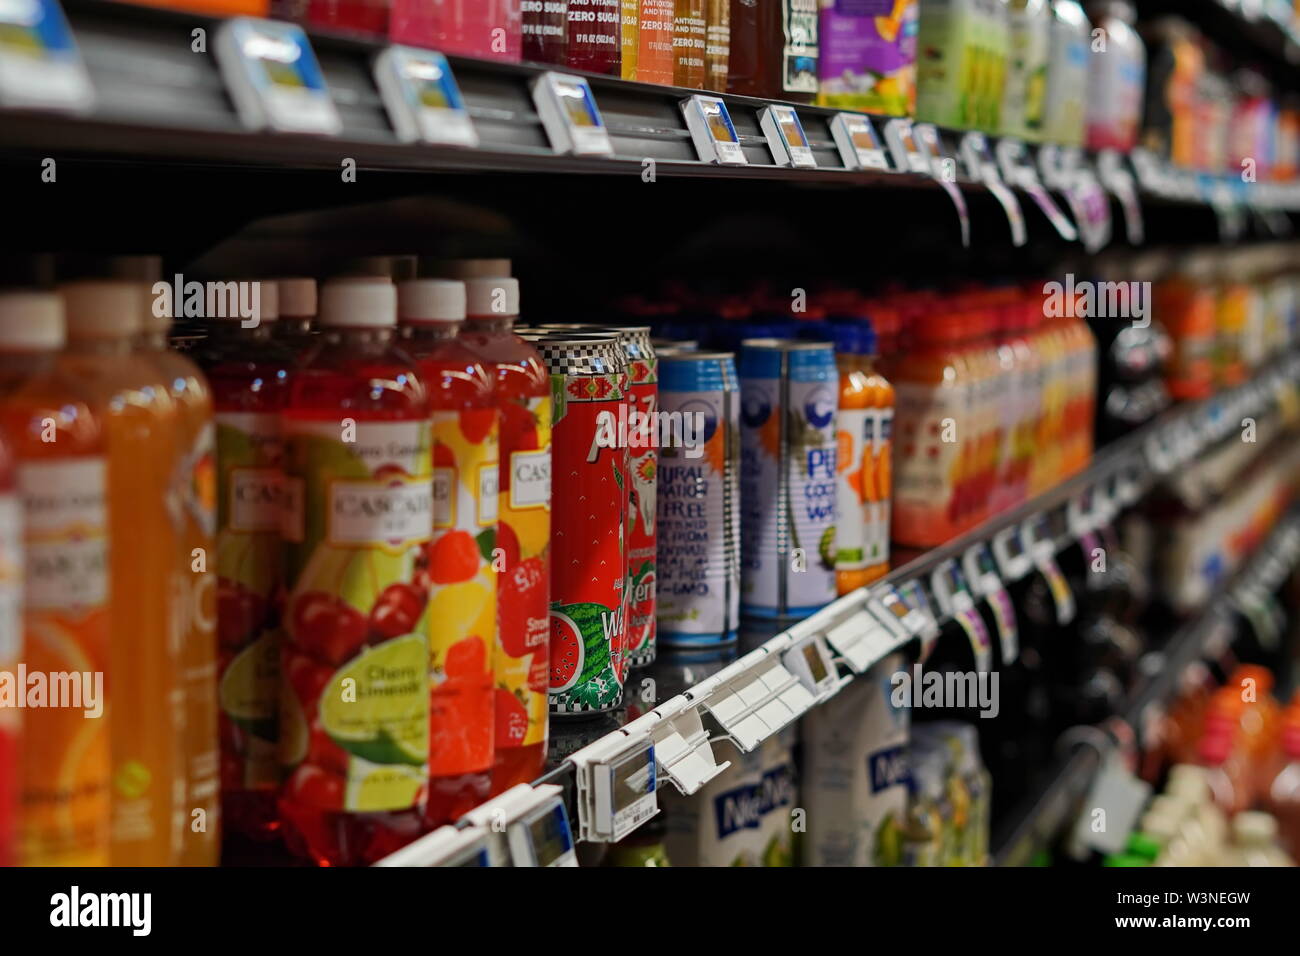 New London, CT / USA - June 2, 2019: Shelves full of health drinks at the supermarket Stock Photo